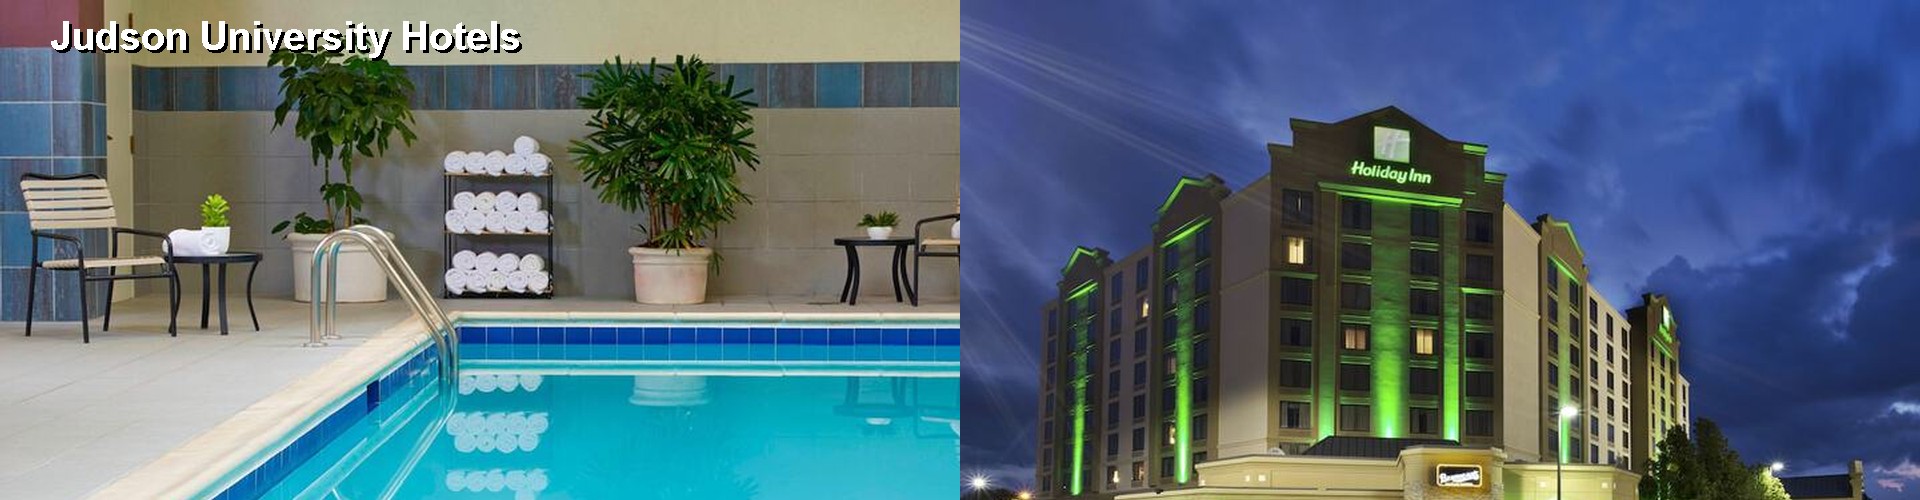 4 Best Hotels near Judson University